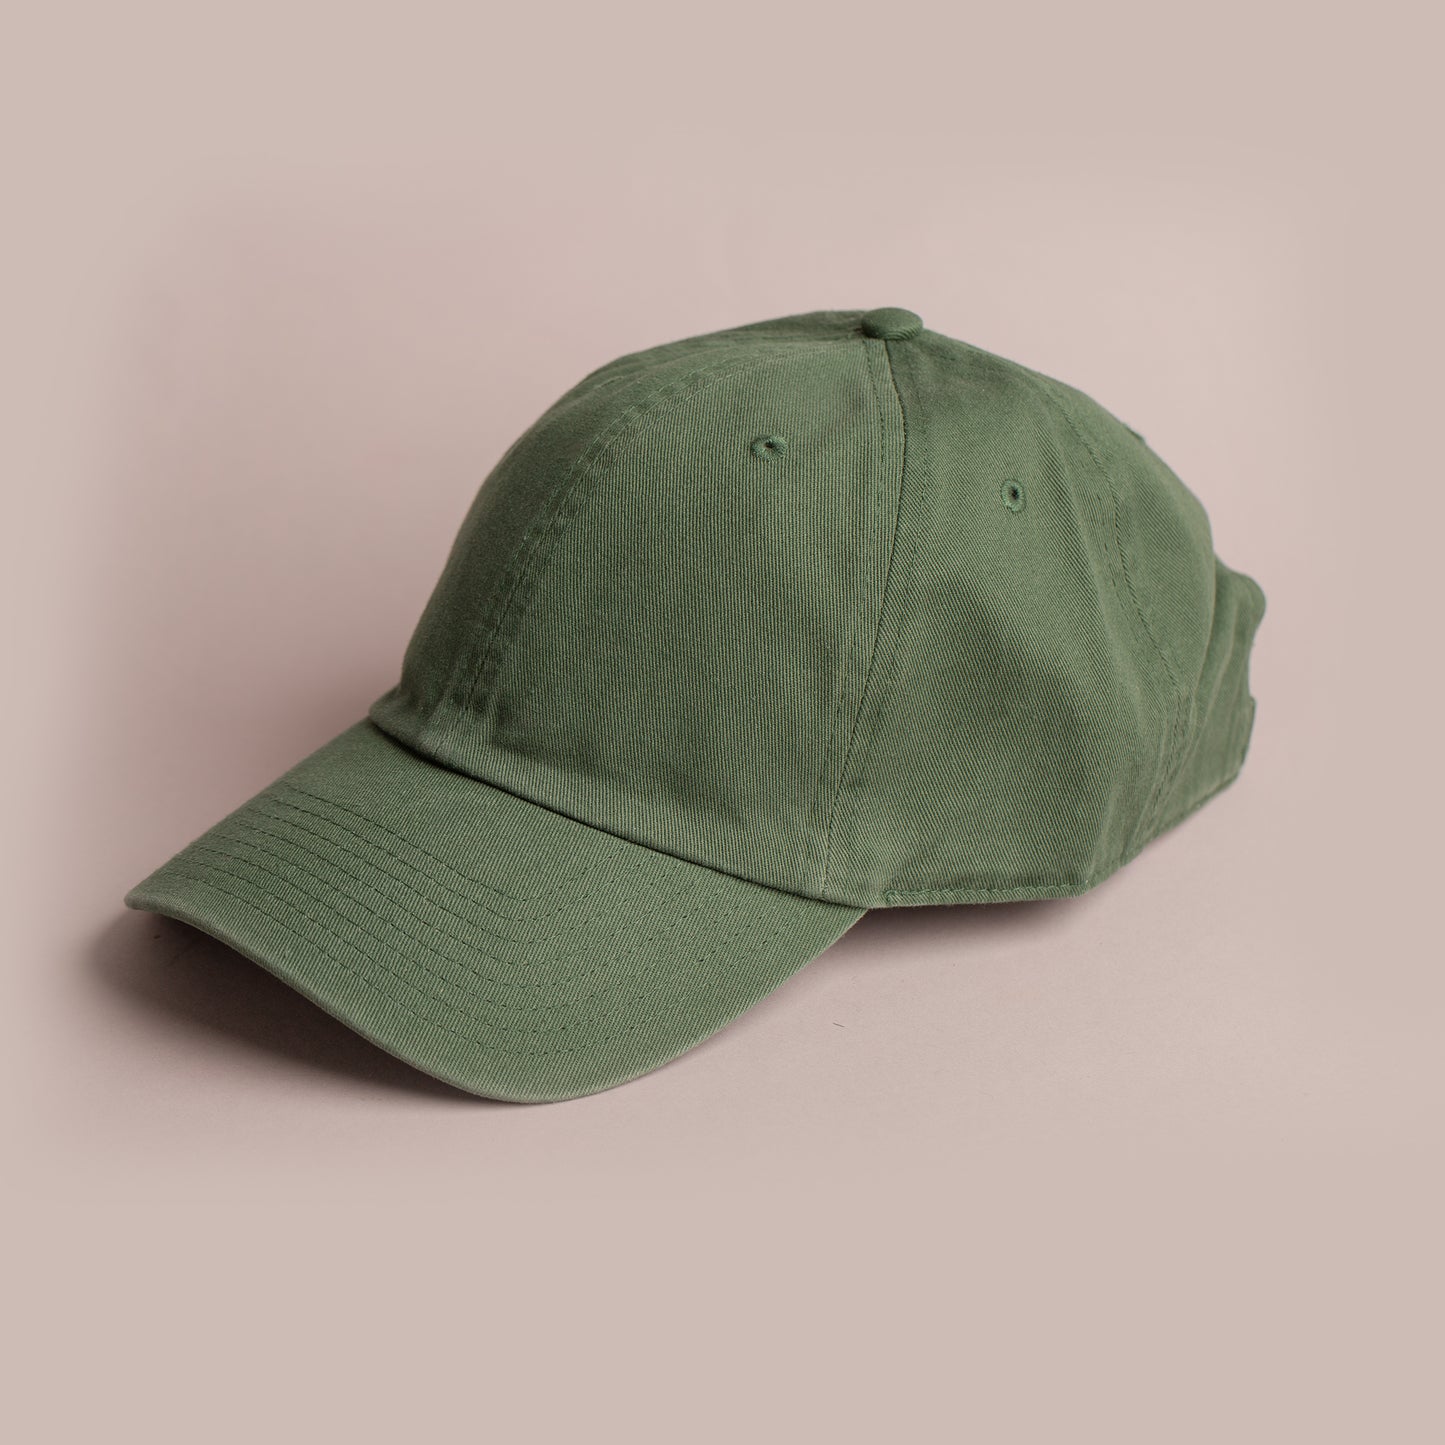 Blank Hat - 47 Brand Dad Cap - Green